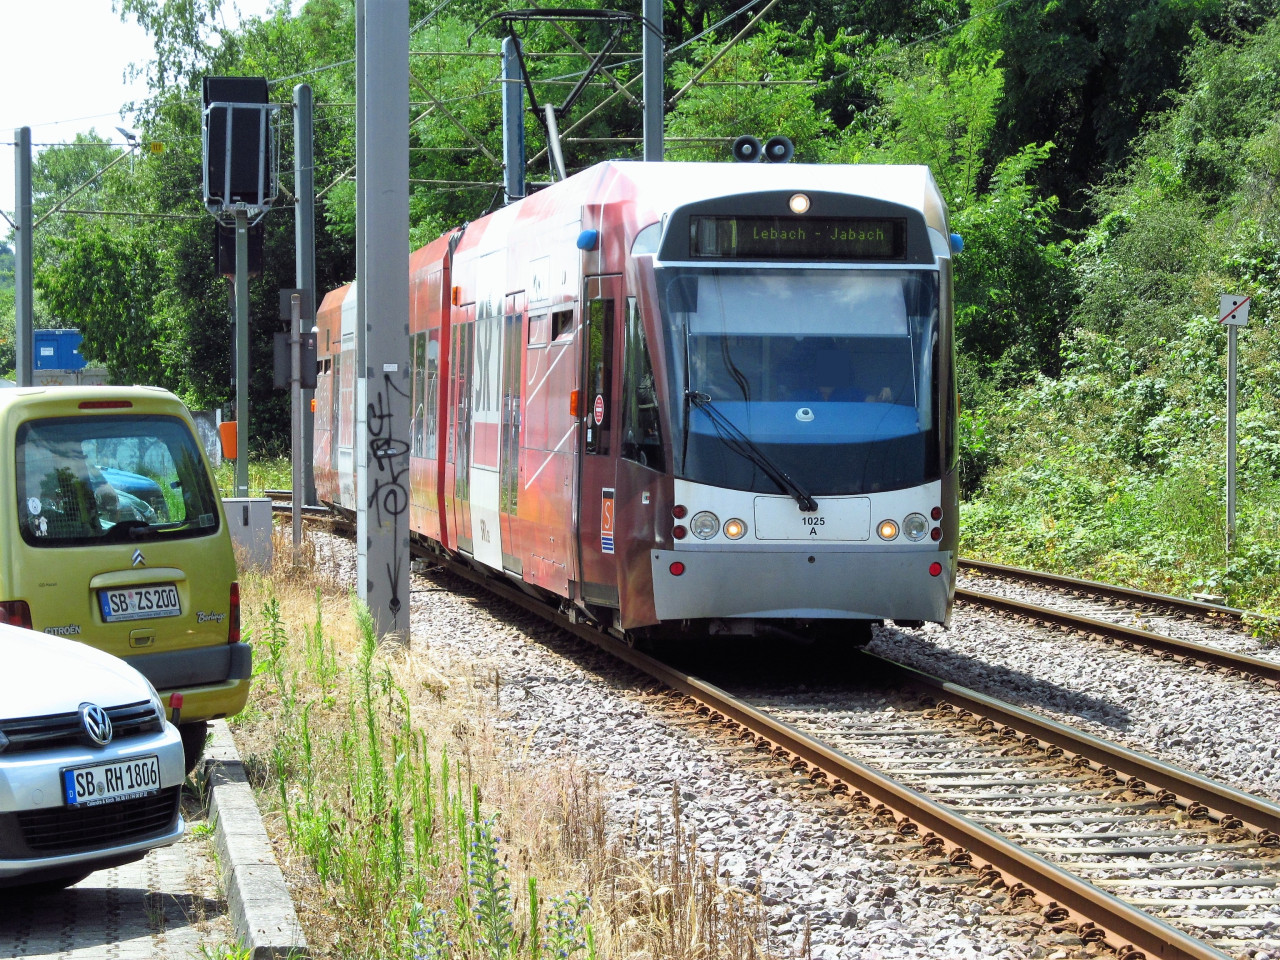 Tram. do Lebachu odboila z tram. trat na el. tra (v pozad pokraovaly koleje do Vlklingenu)